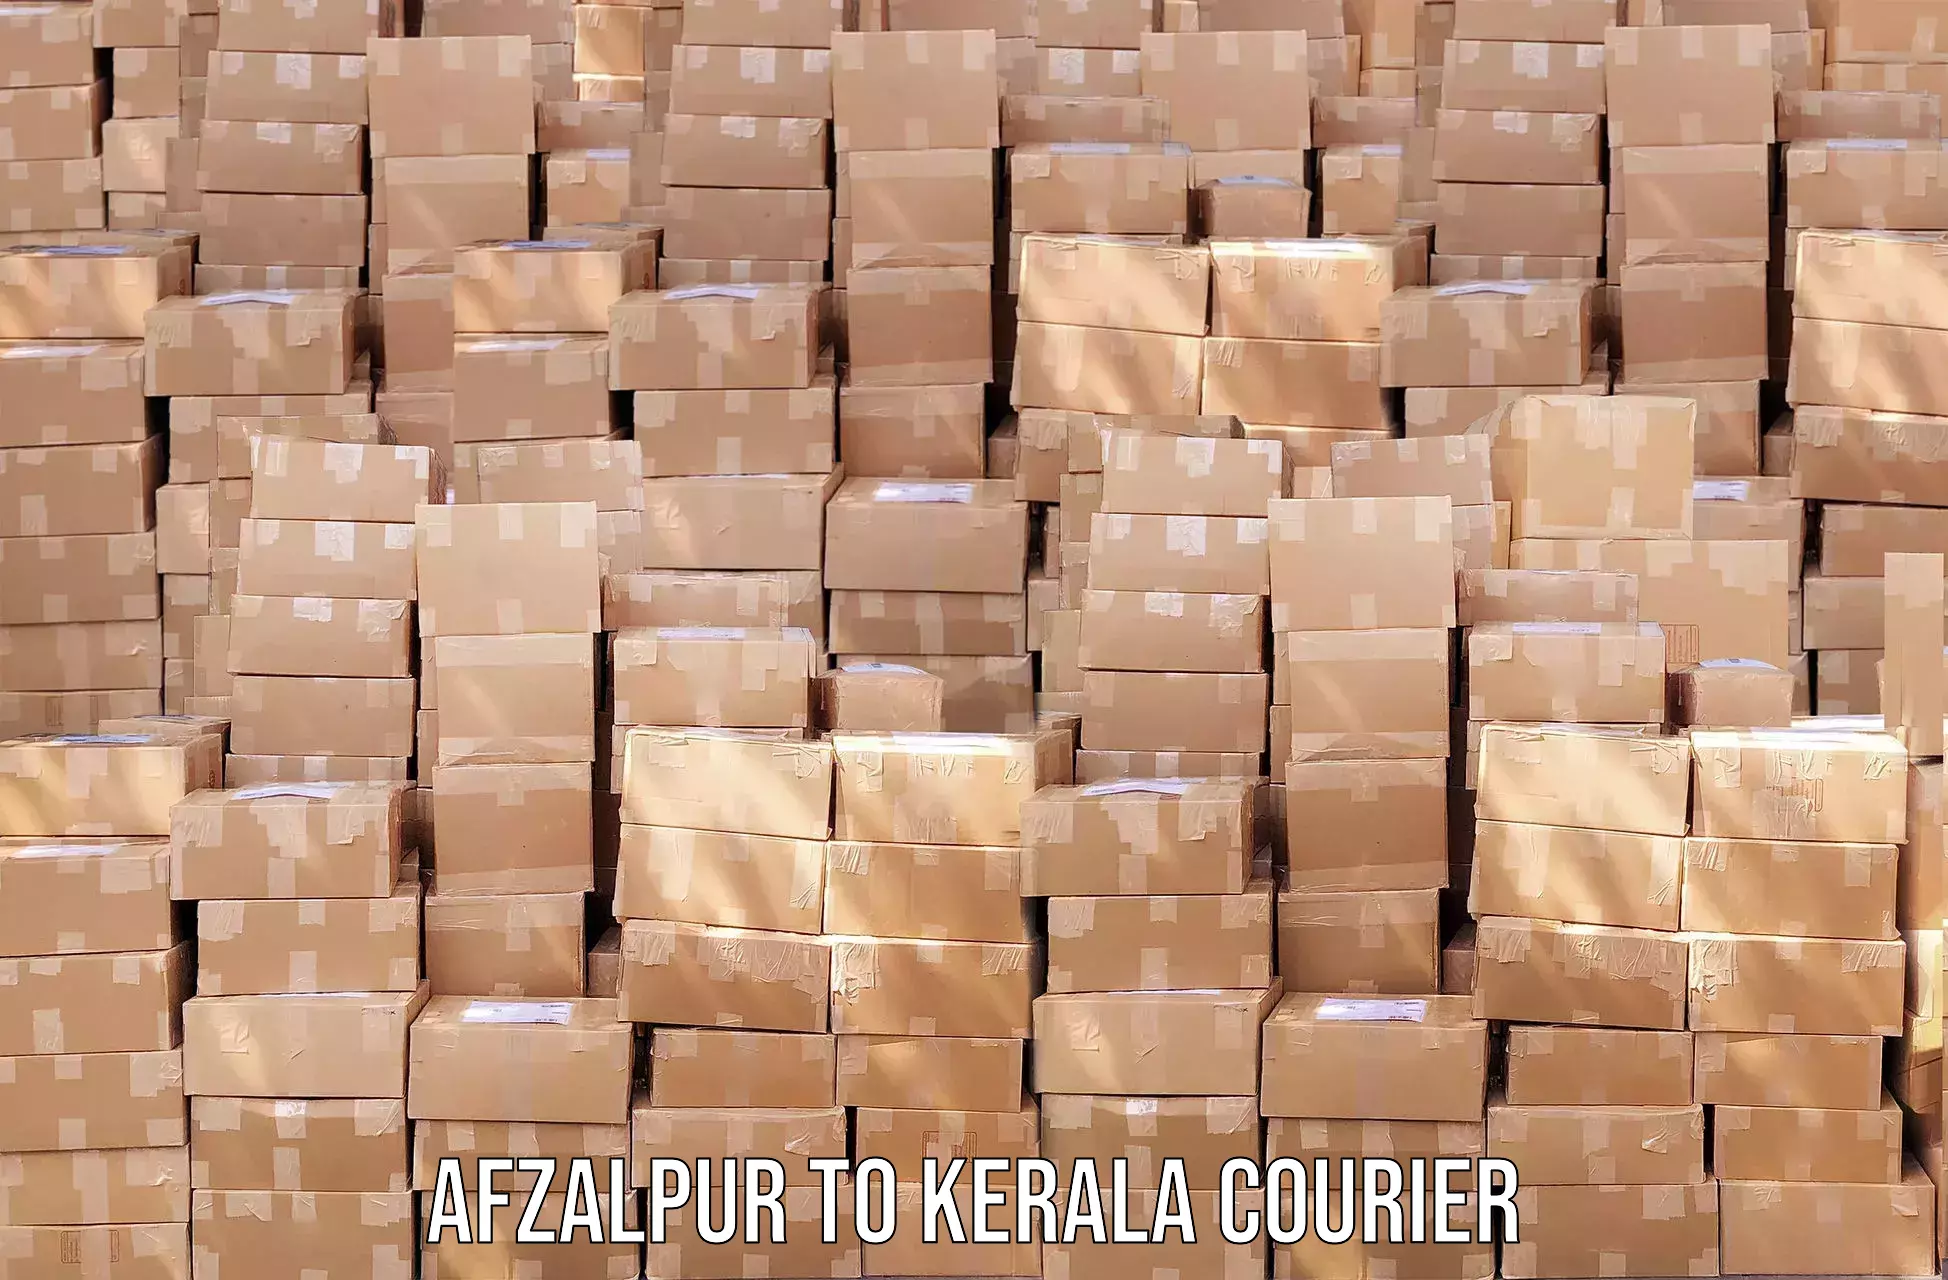 Digital courier platforms Afzalpur to Kerala